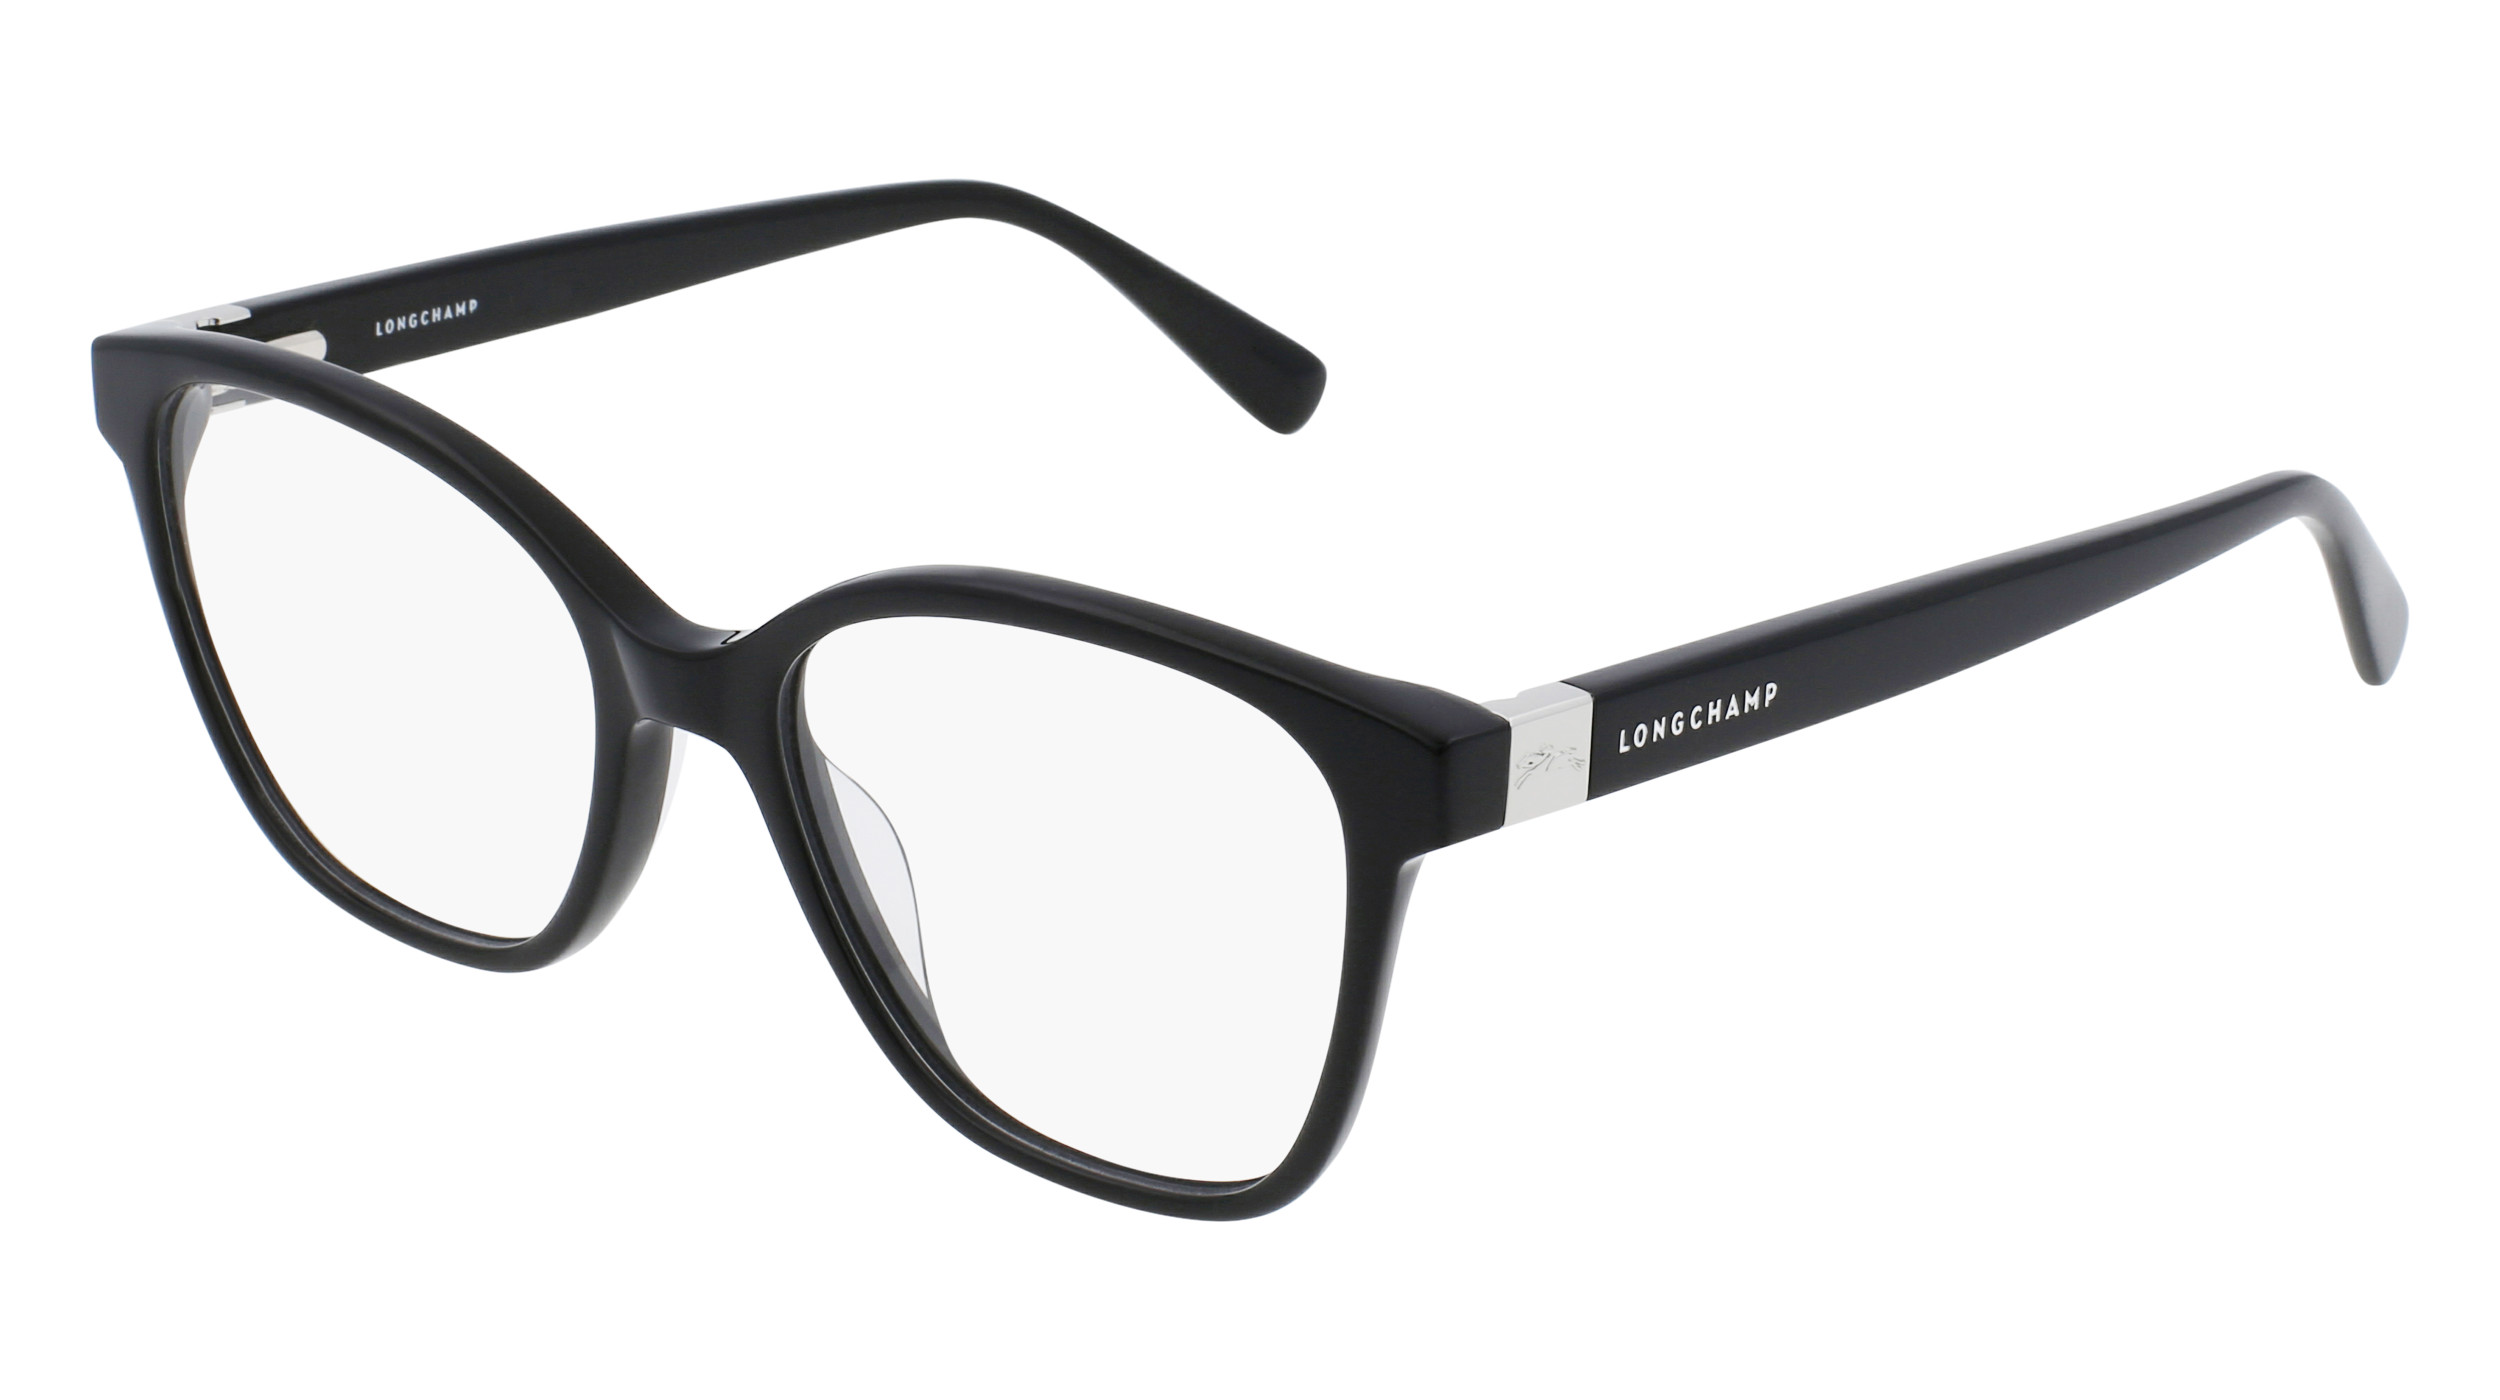 Longchamp Black Eyeglasses By G&M Eyecare